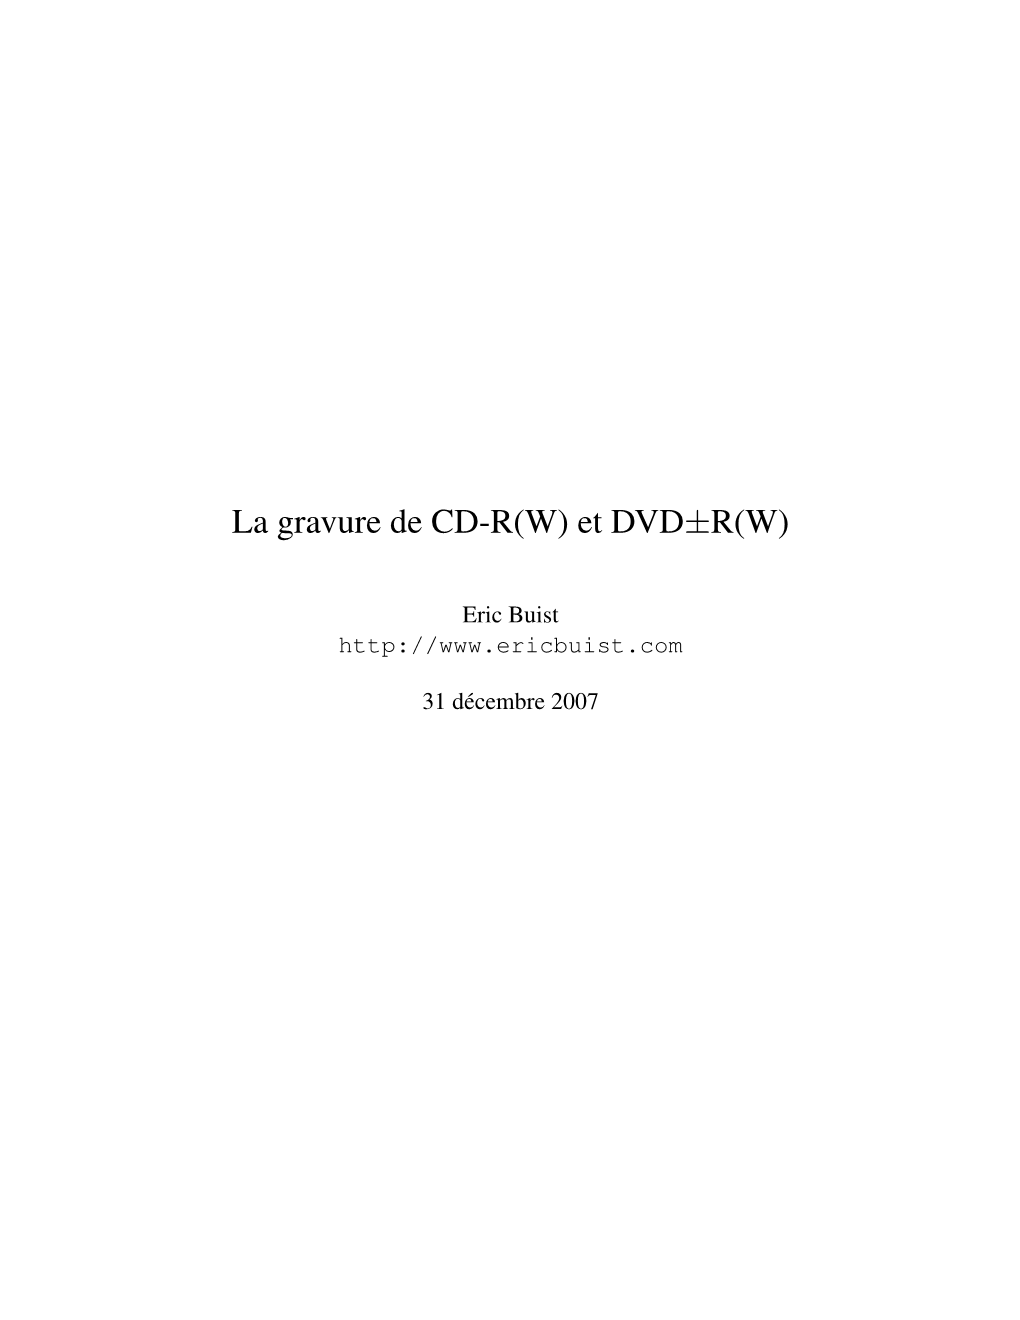 La Gravure De CD-R(W), DVD-R(W)